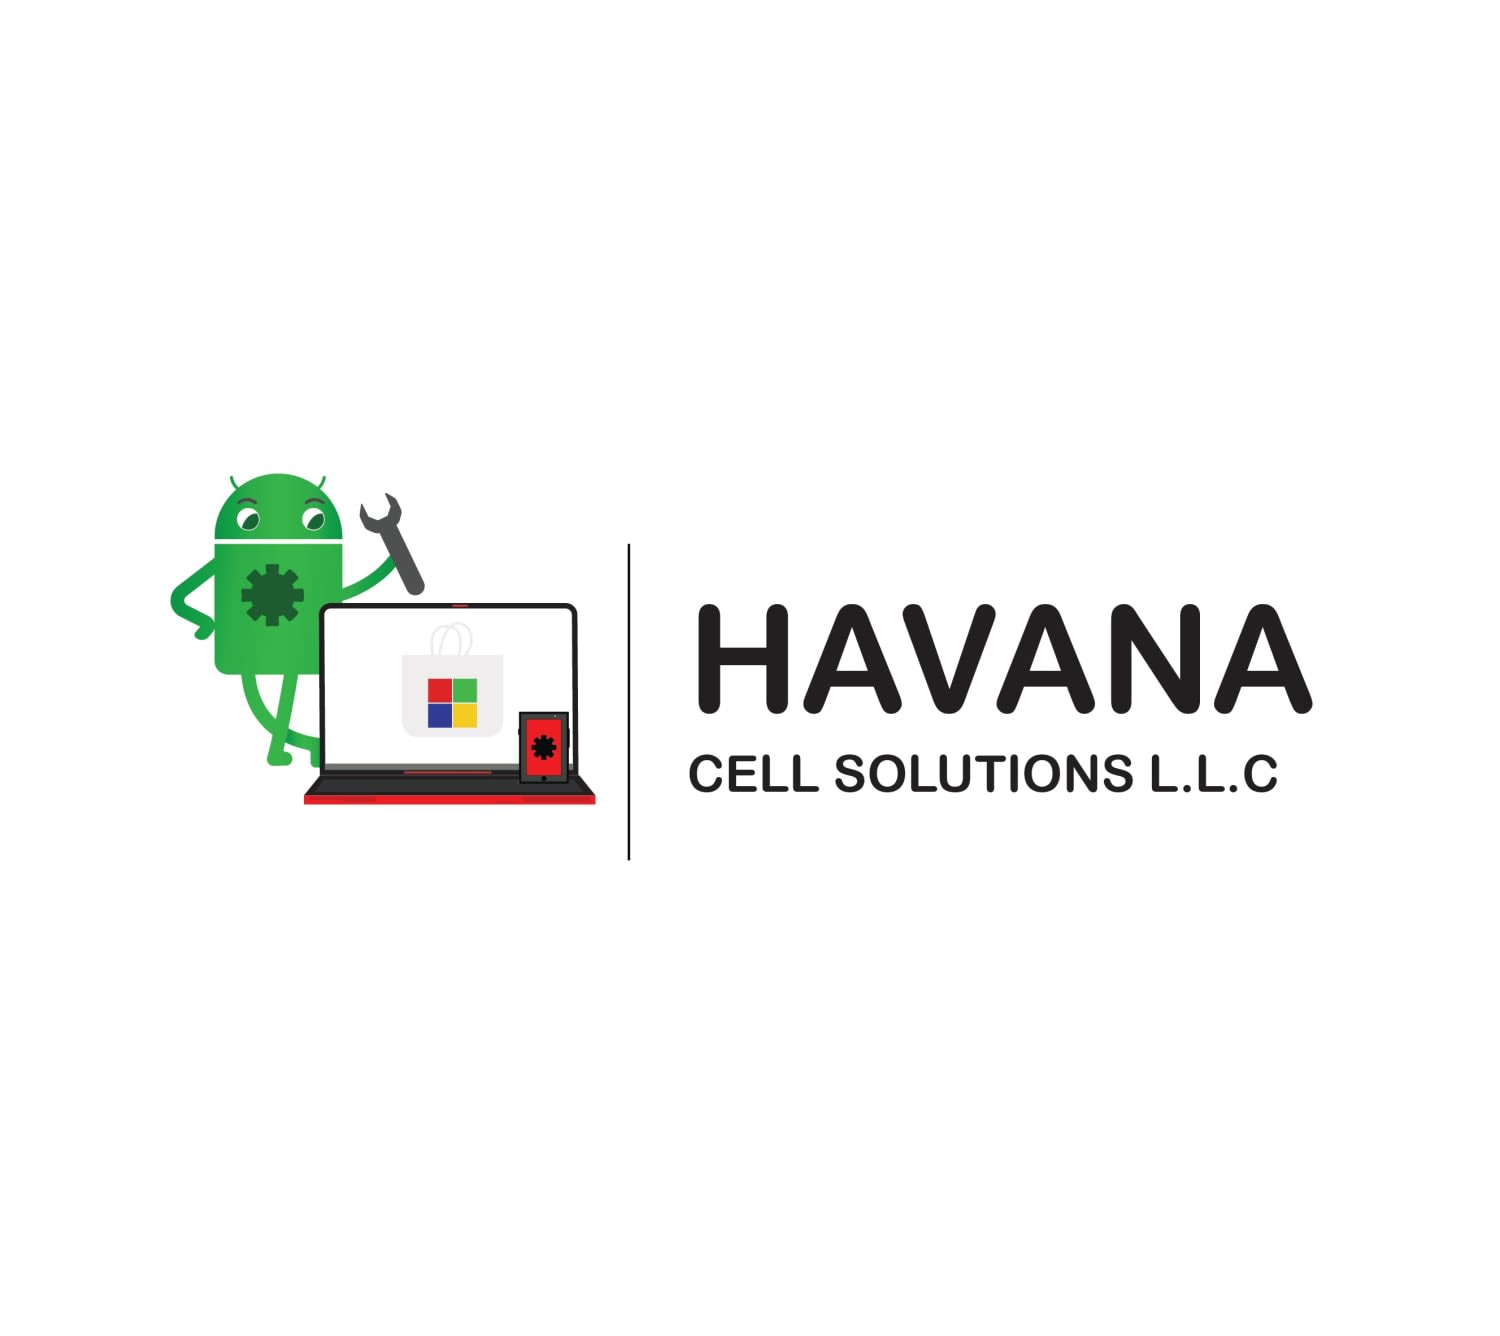 Havana Cell Solutions L.L.C.